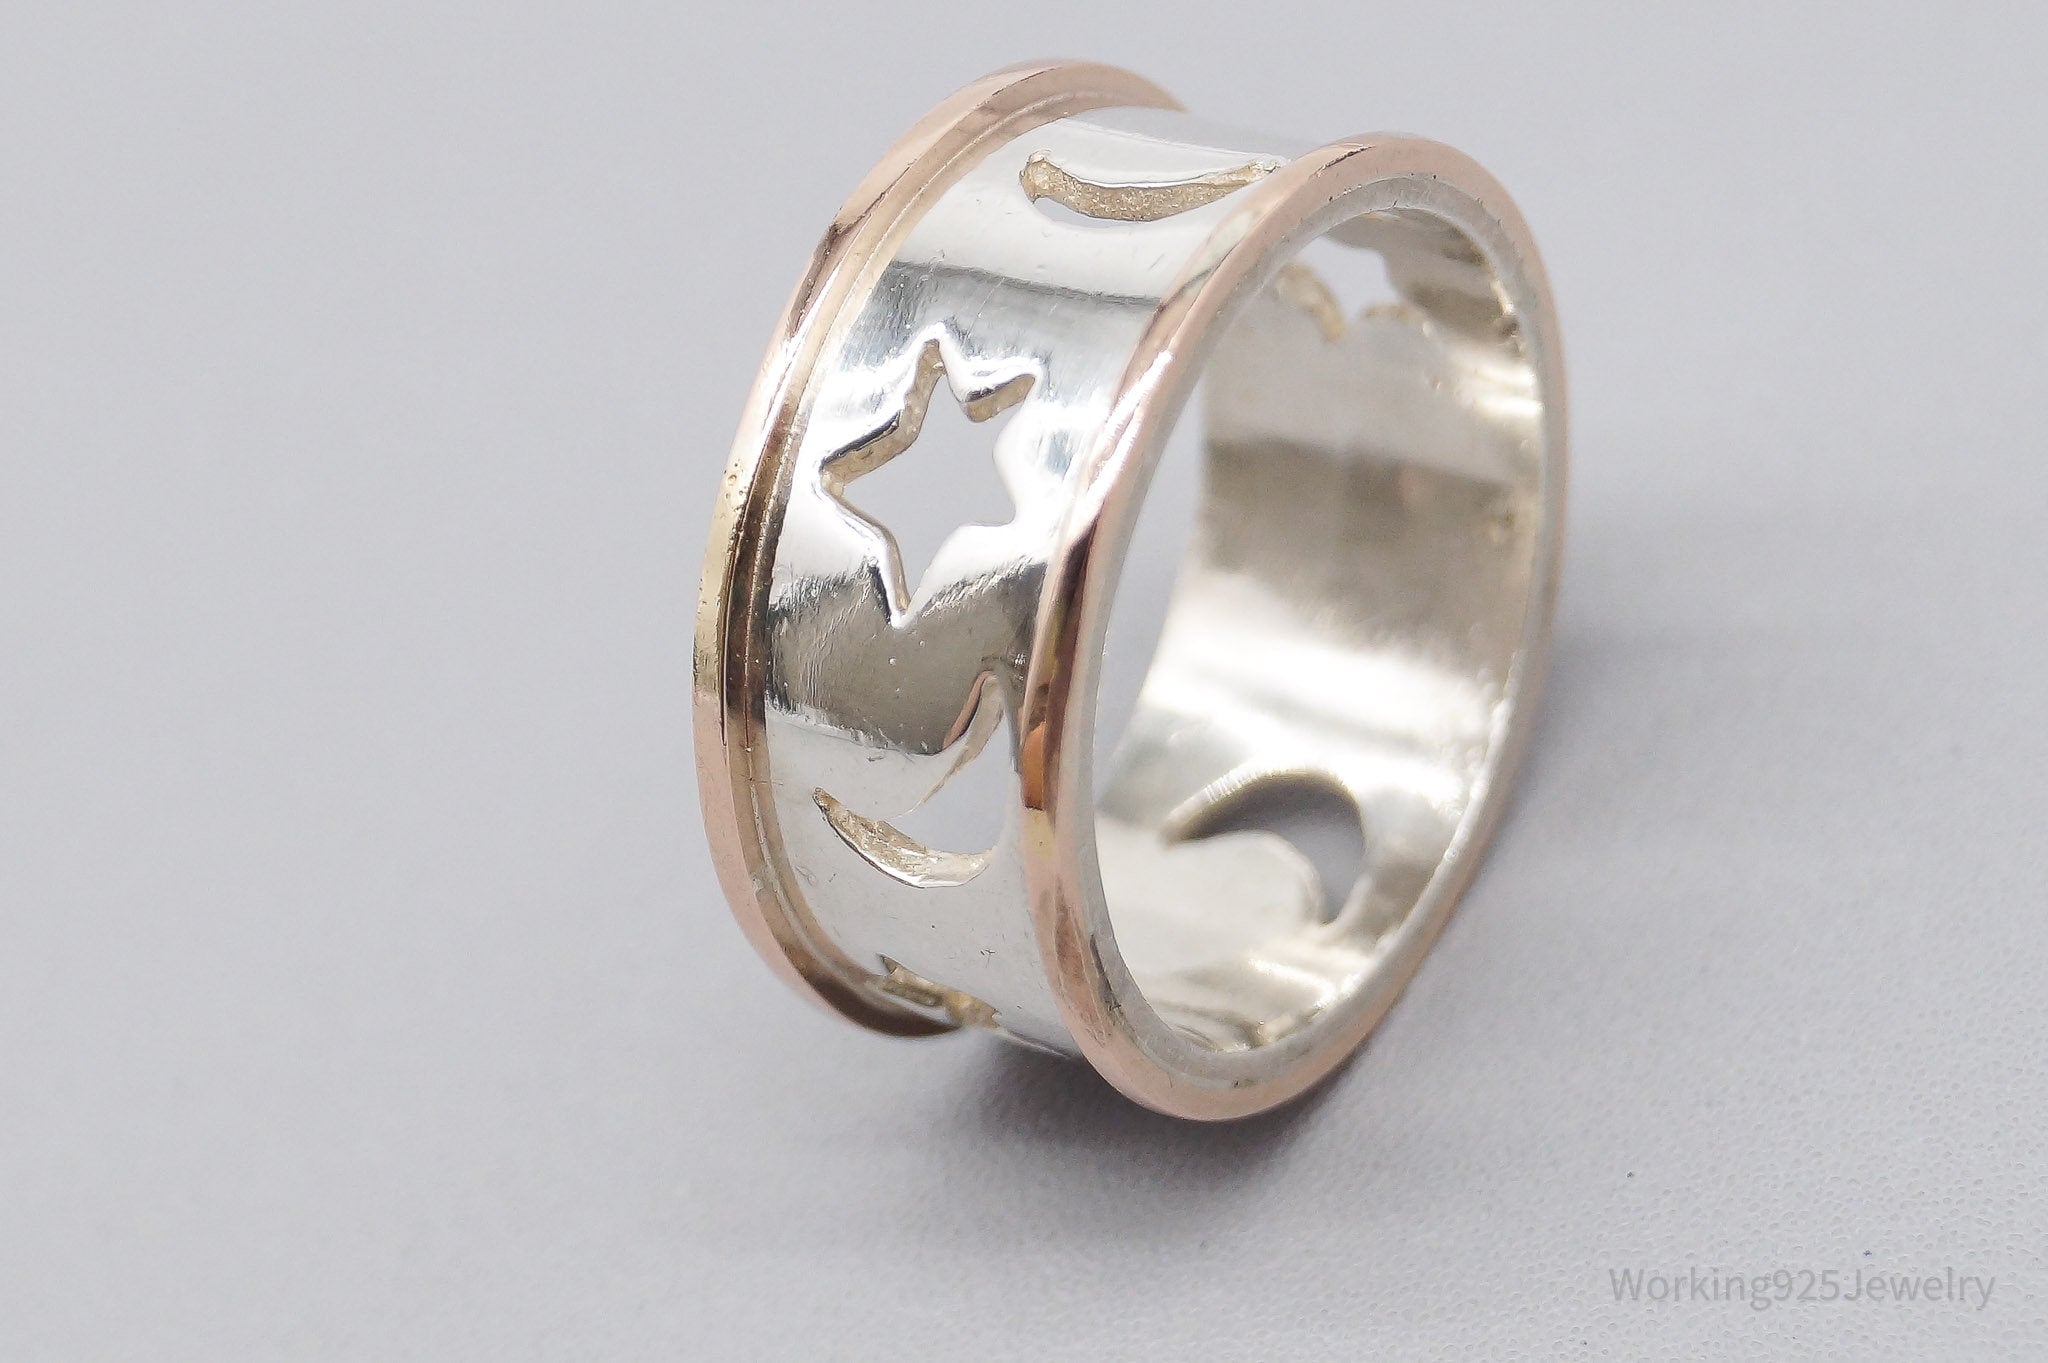 Vintage Moons & Stars Rose Gold Sterling Silver Ring - Size 7.5